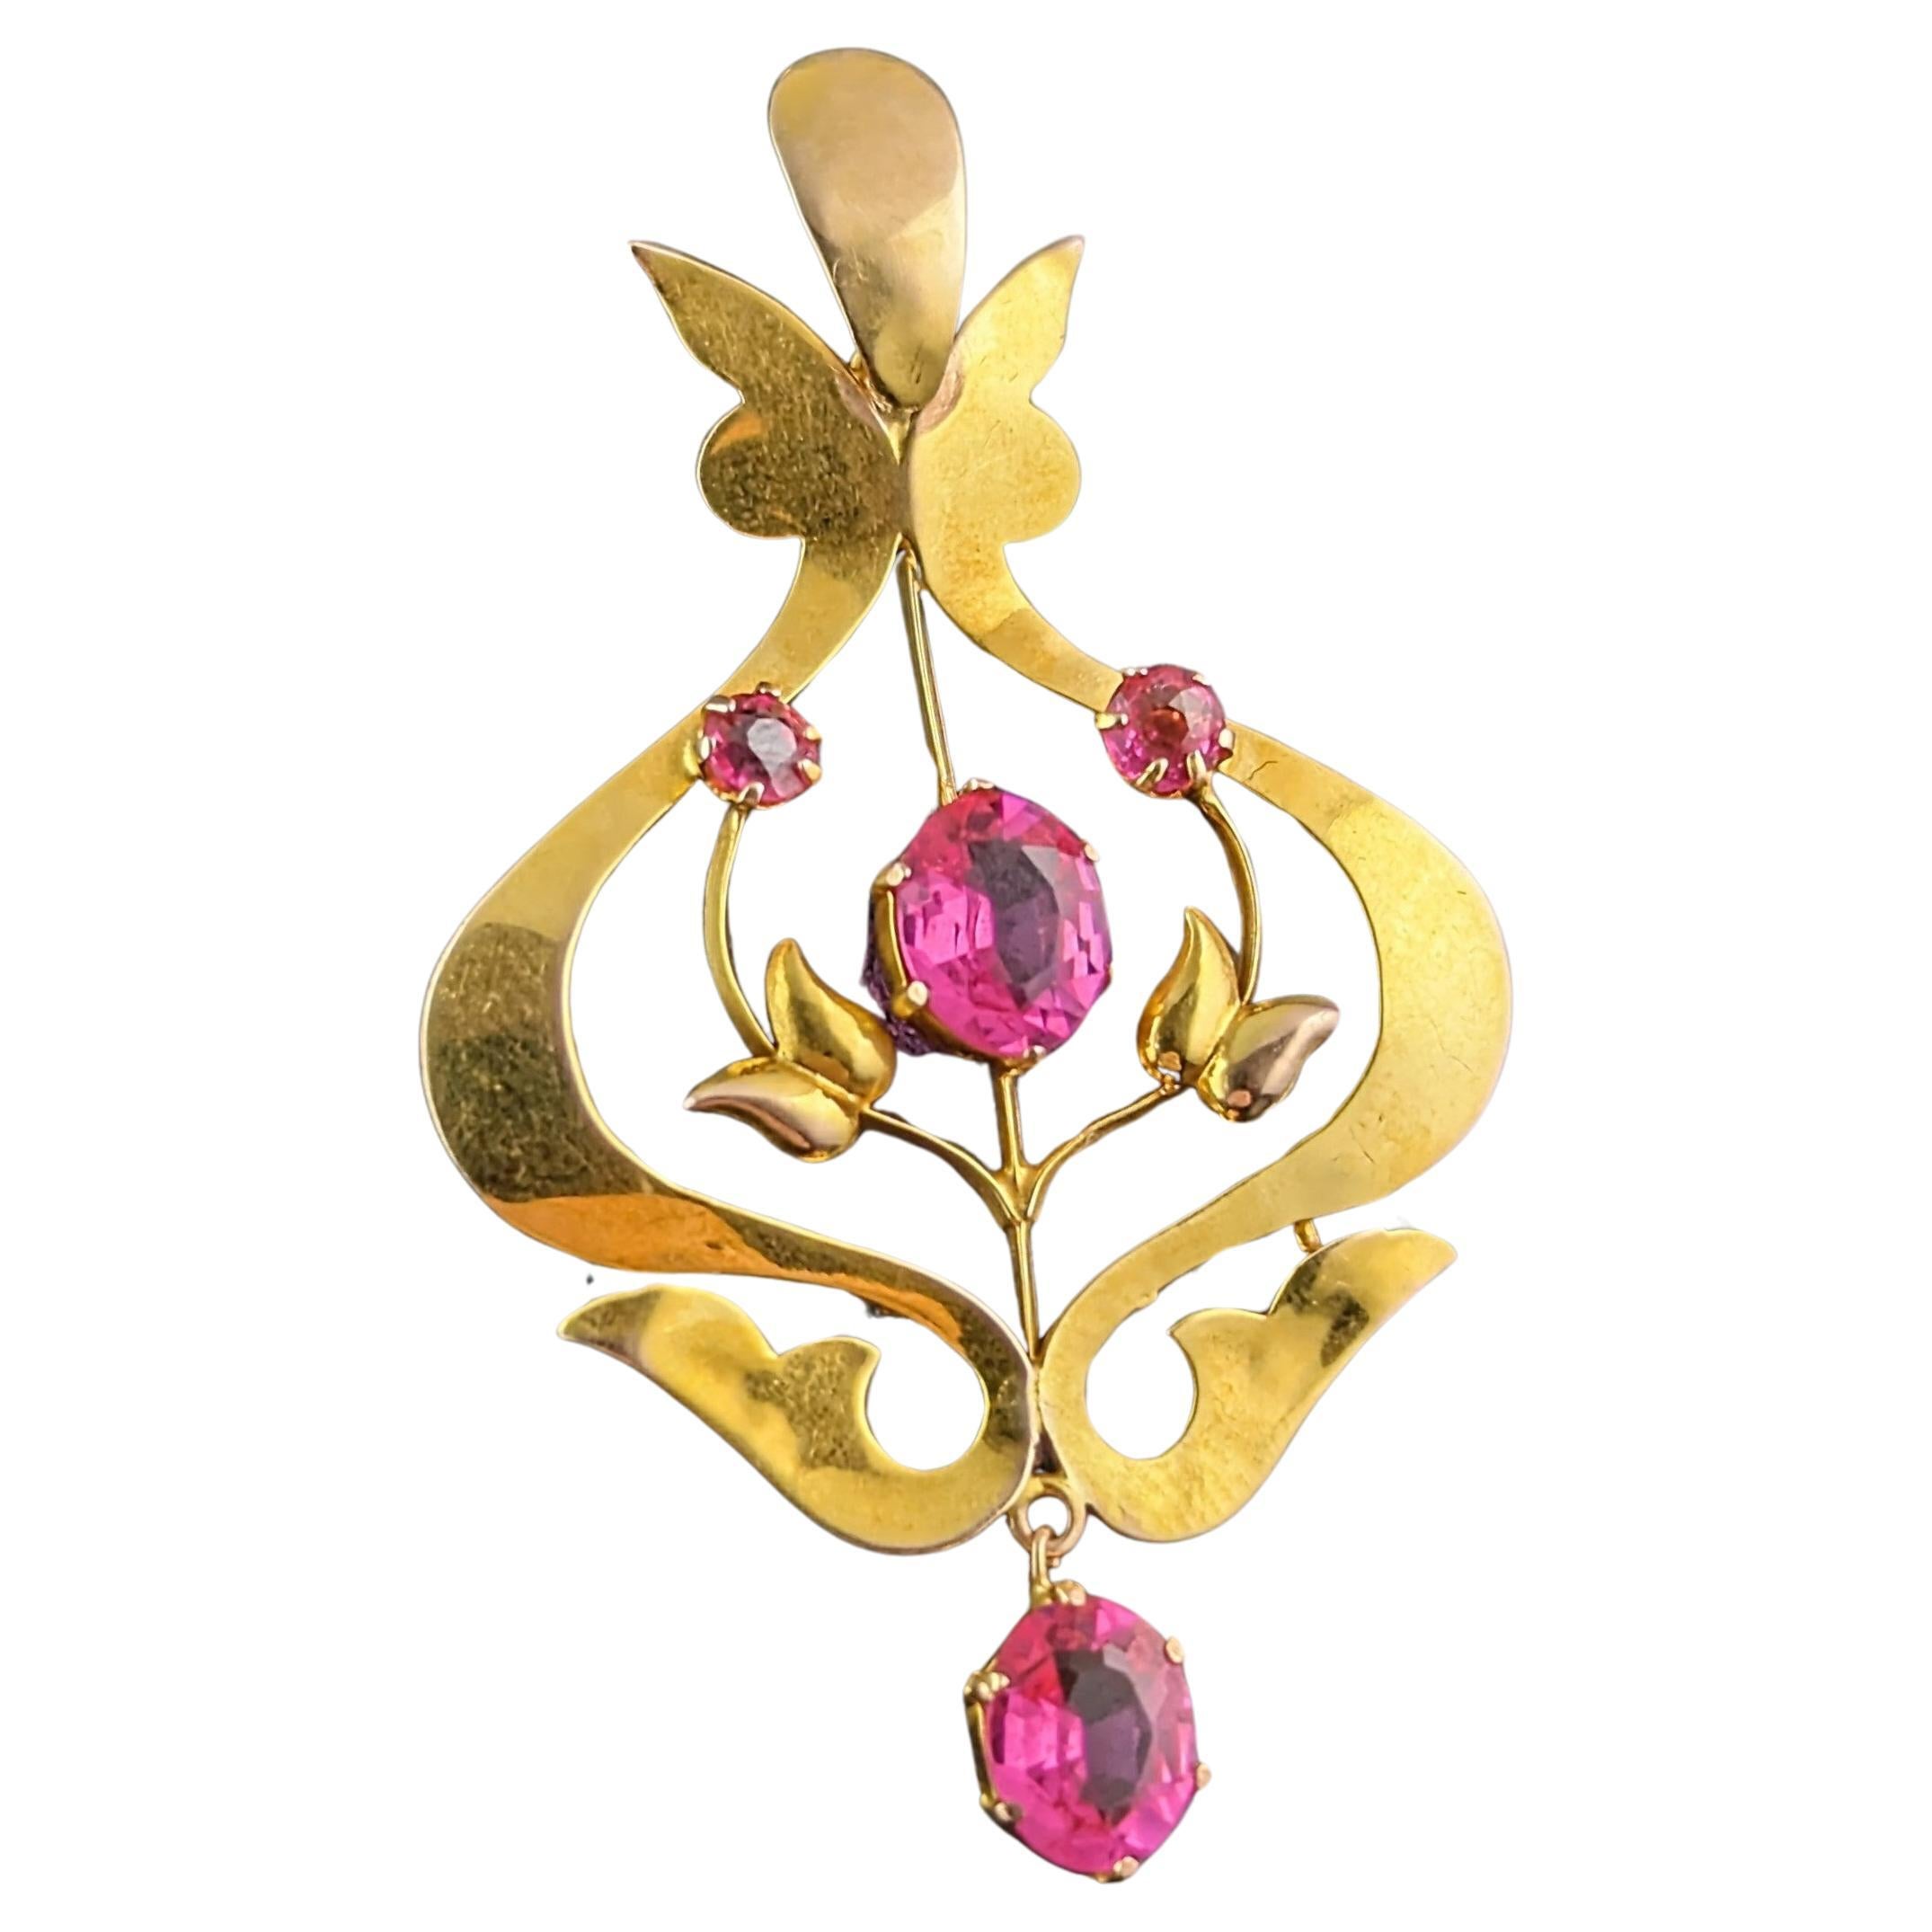 Antiker Anhänger aus 9 Karat Gold und rosa Paste, Jugendstil, Art nouveau 